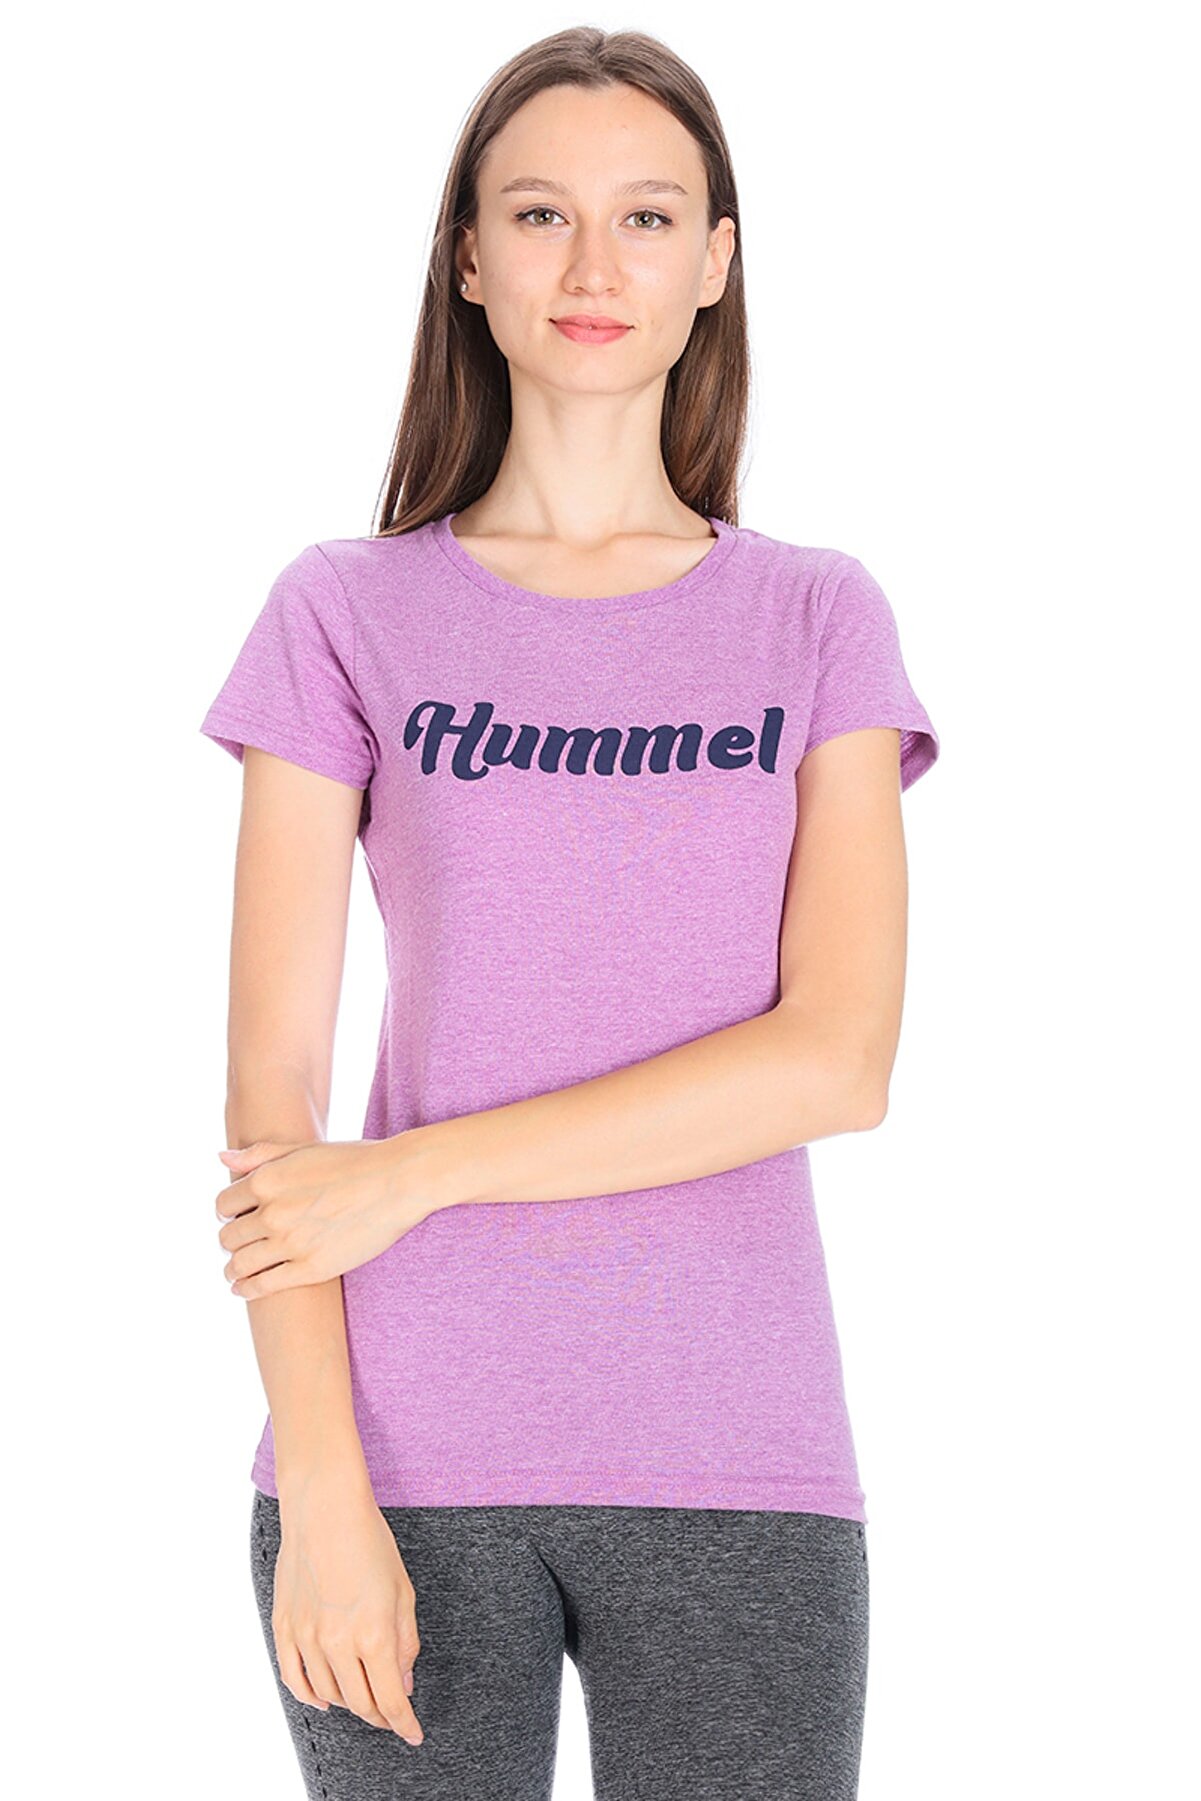 hummel Kadın T-Shirt Uhıra - 910824